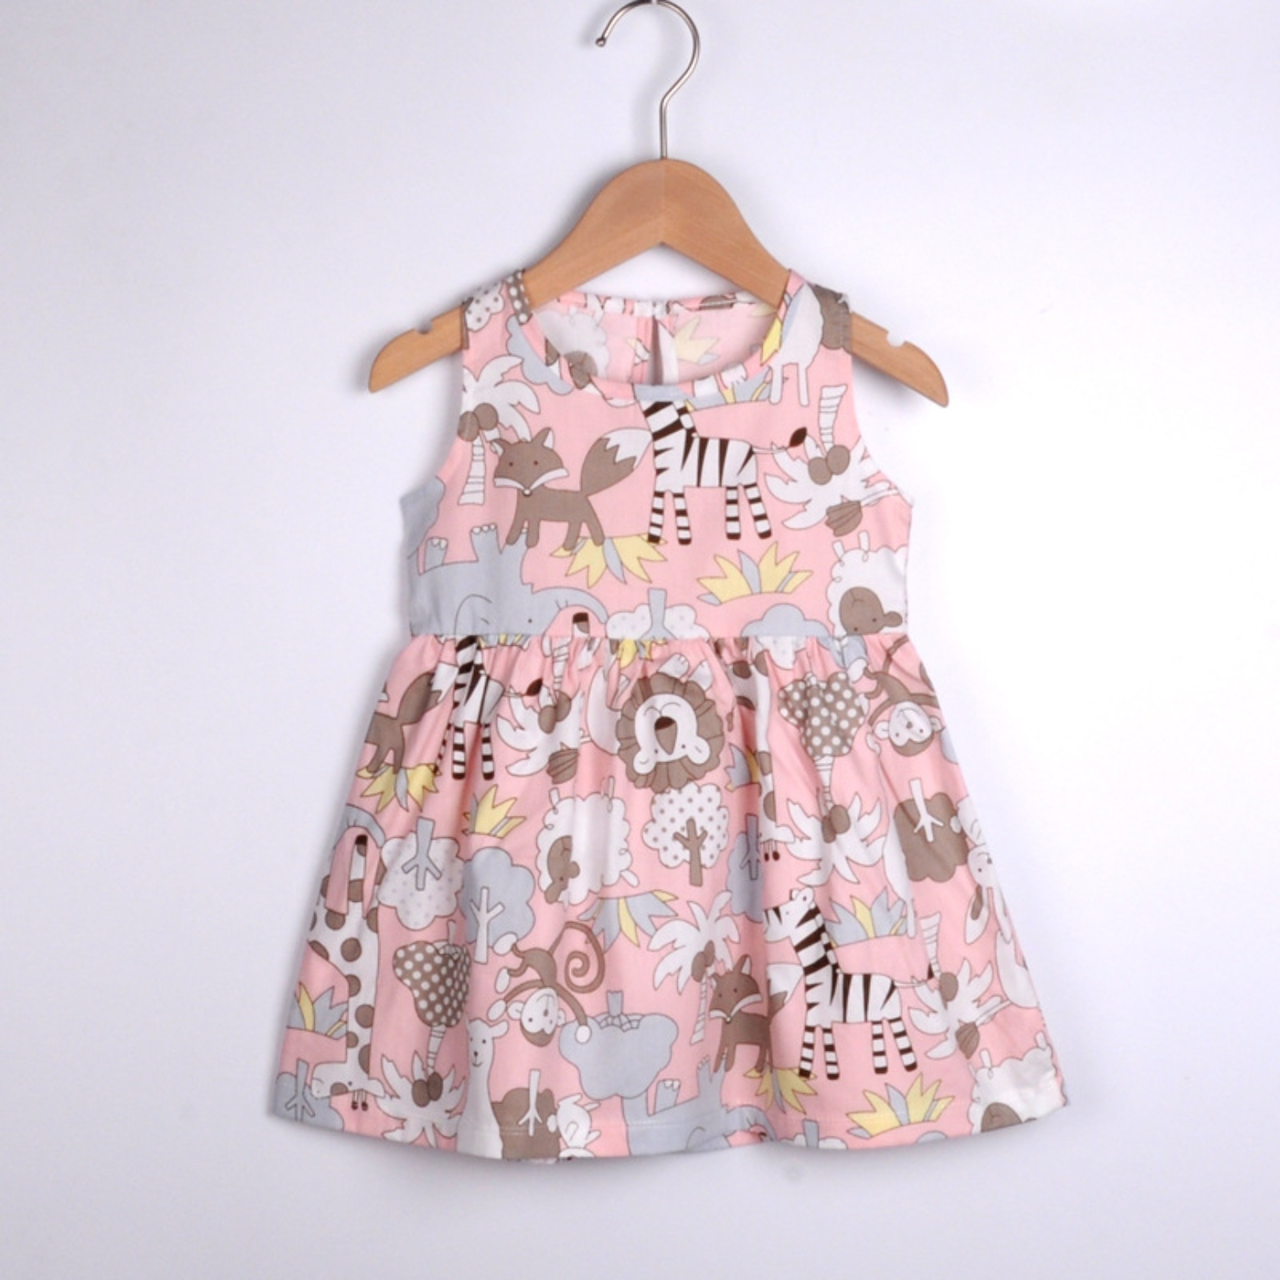 Mini Baby เดรสเด็กผู้หญิง (update ลาย) มินิเดรส เดรสเด็ก เดรส dress cotton ผ้าดีมาก งานสวยมาก สีสวยสุดๆ